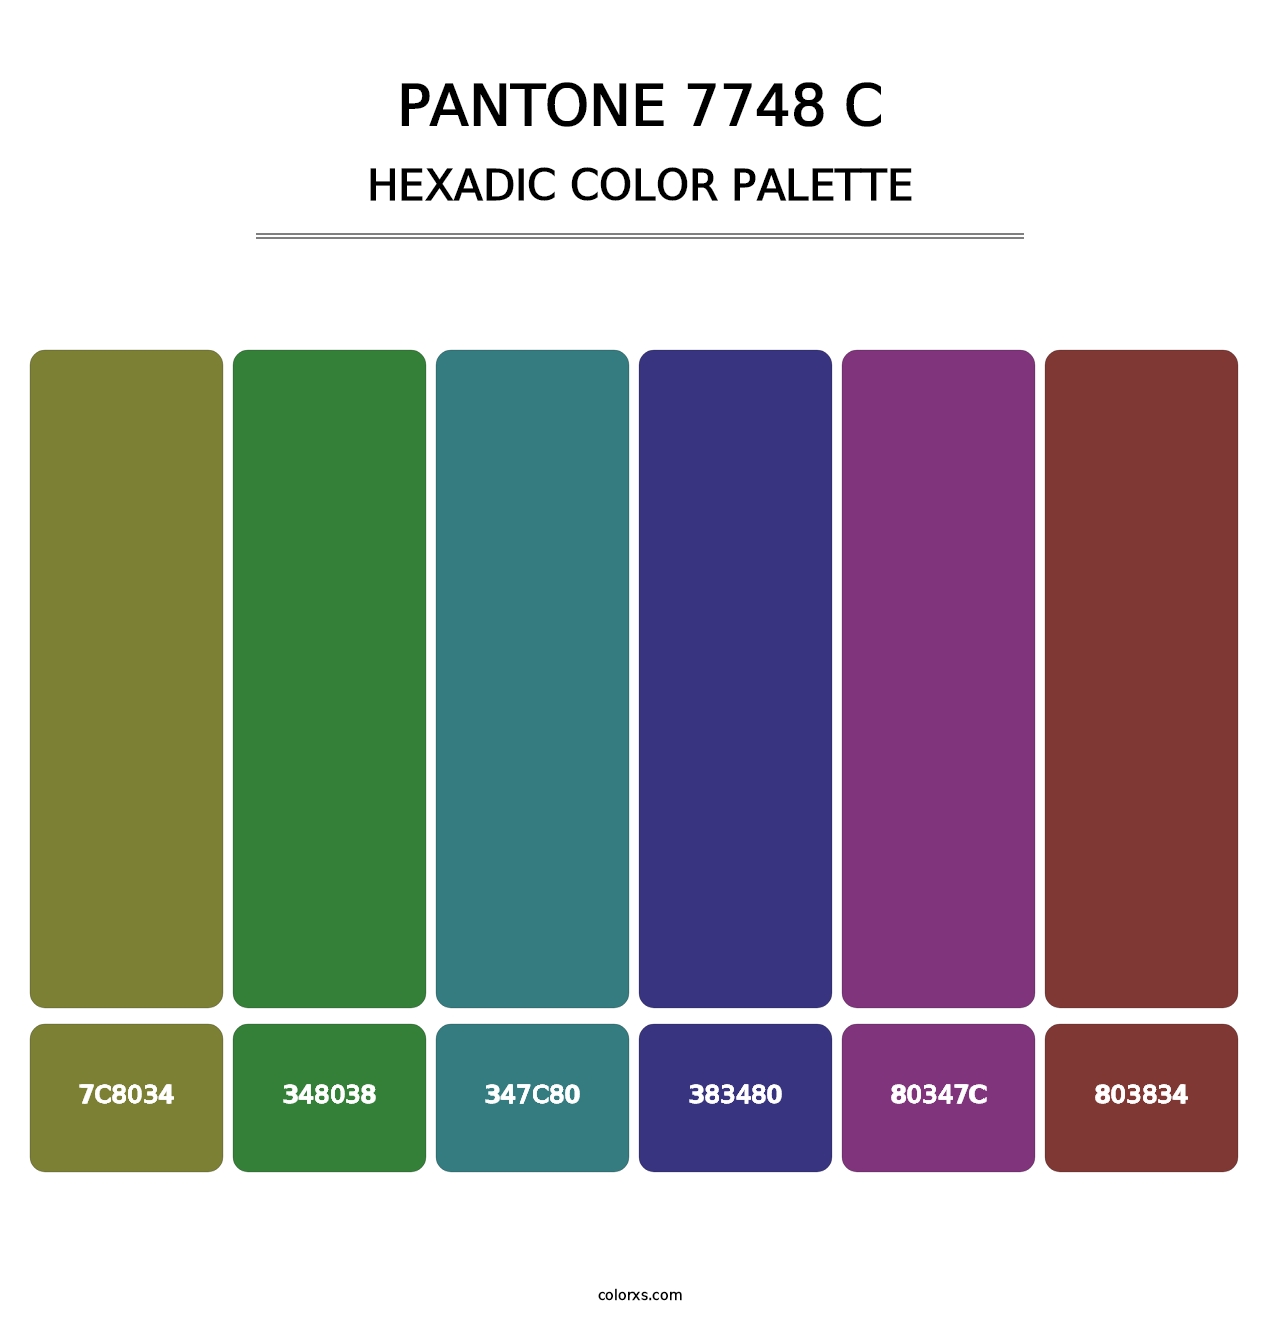 PANTONE 7748 C - Hexadic Color Palette